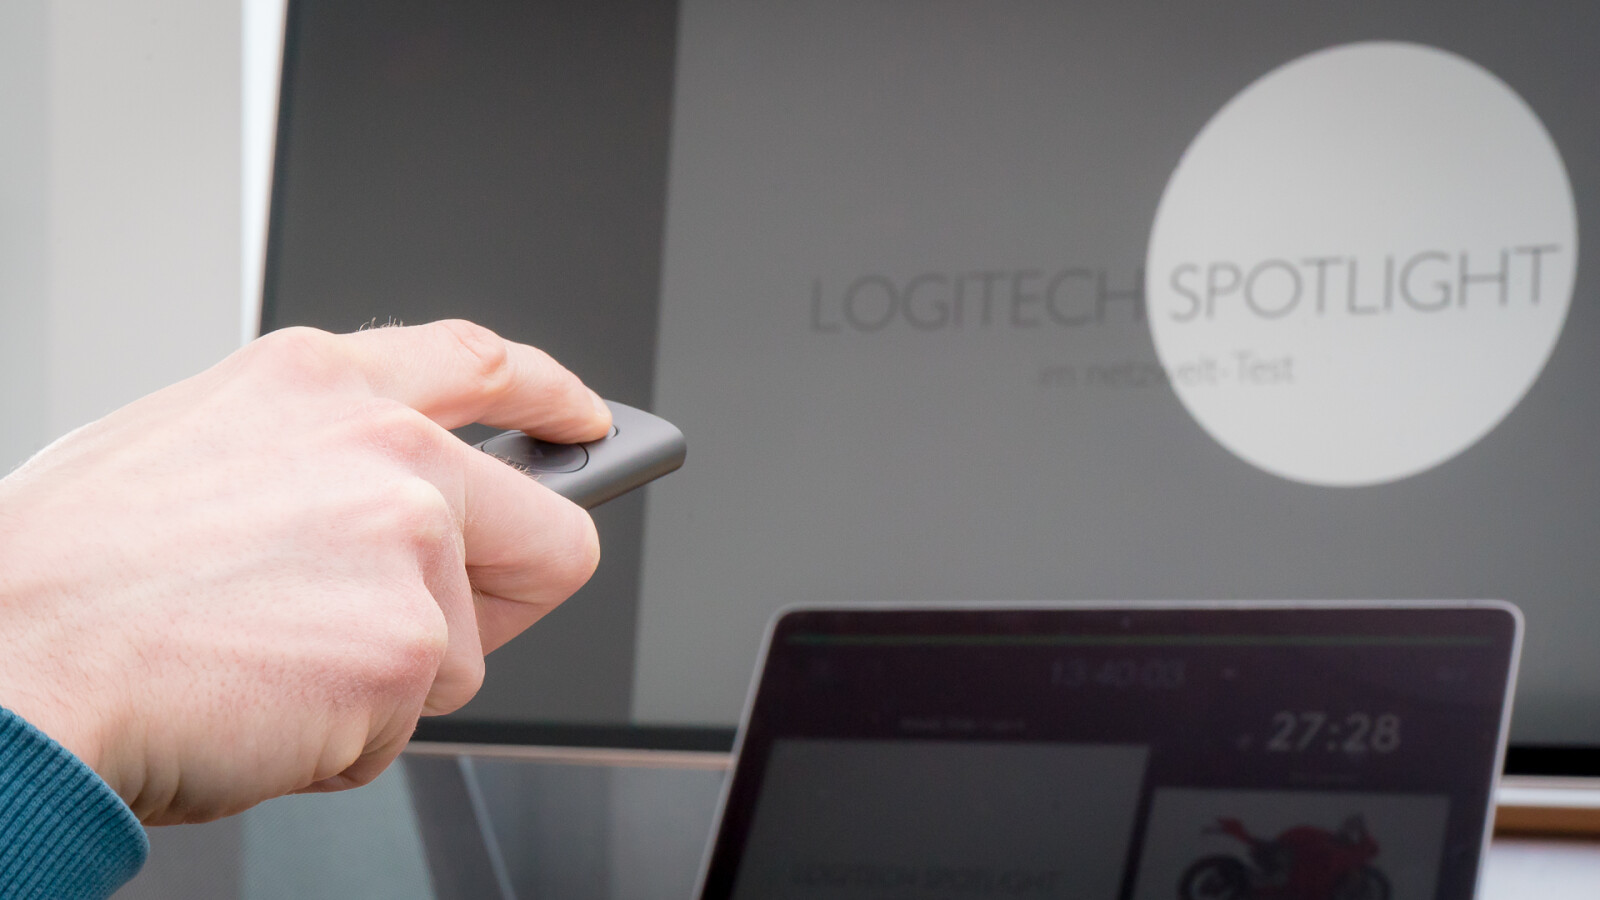 logitech presenter spotlight download